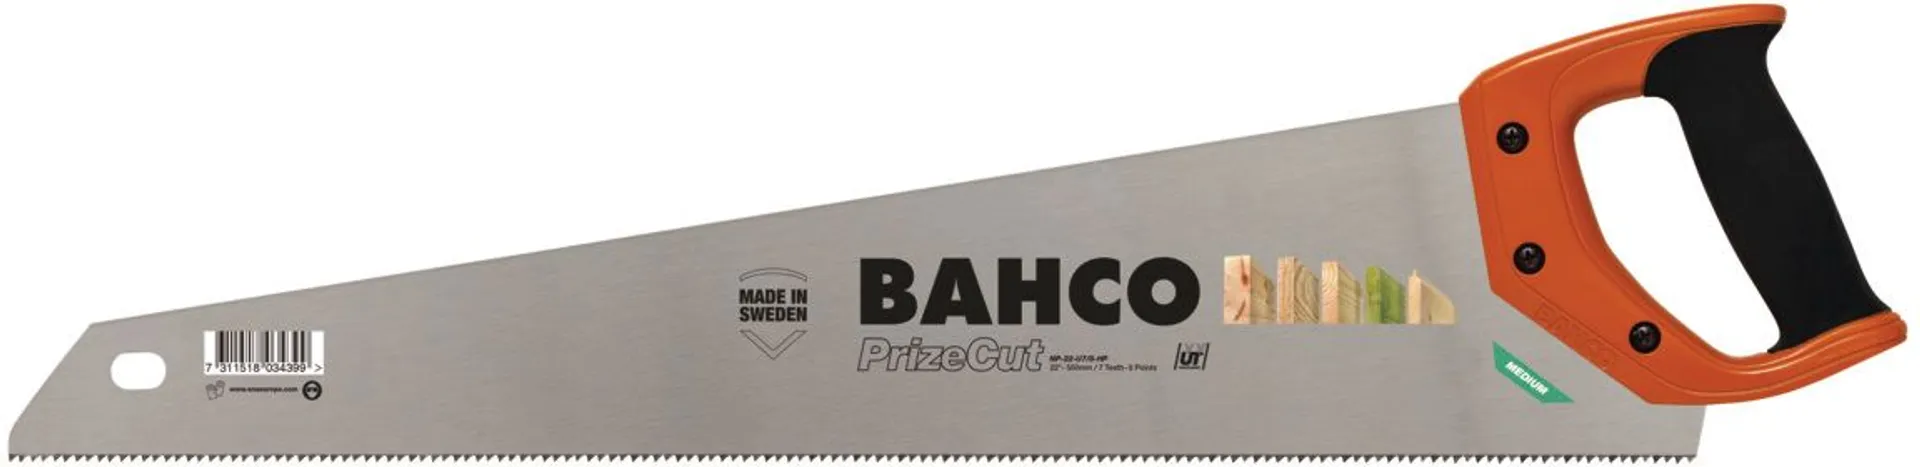 Bahco Prizecut käsisaha 550mm medium hammastus - 1